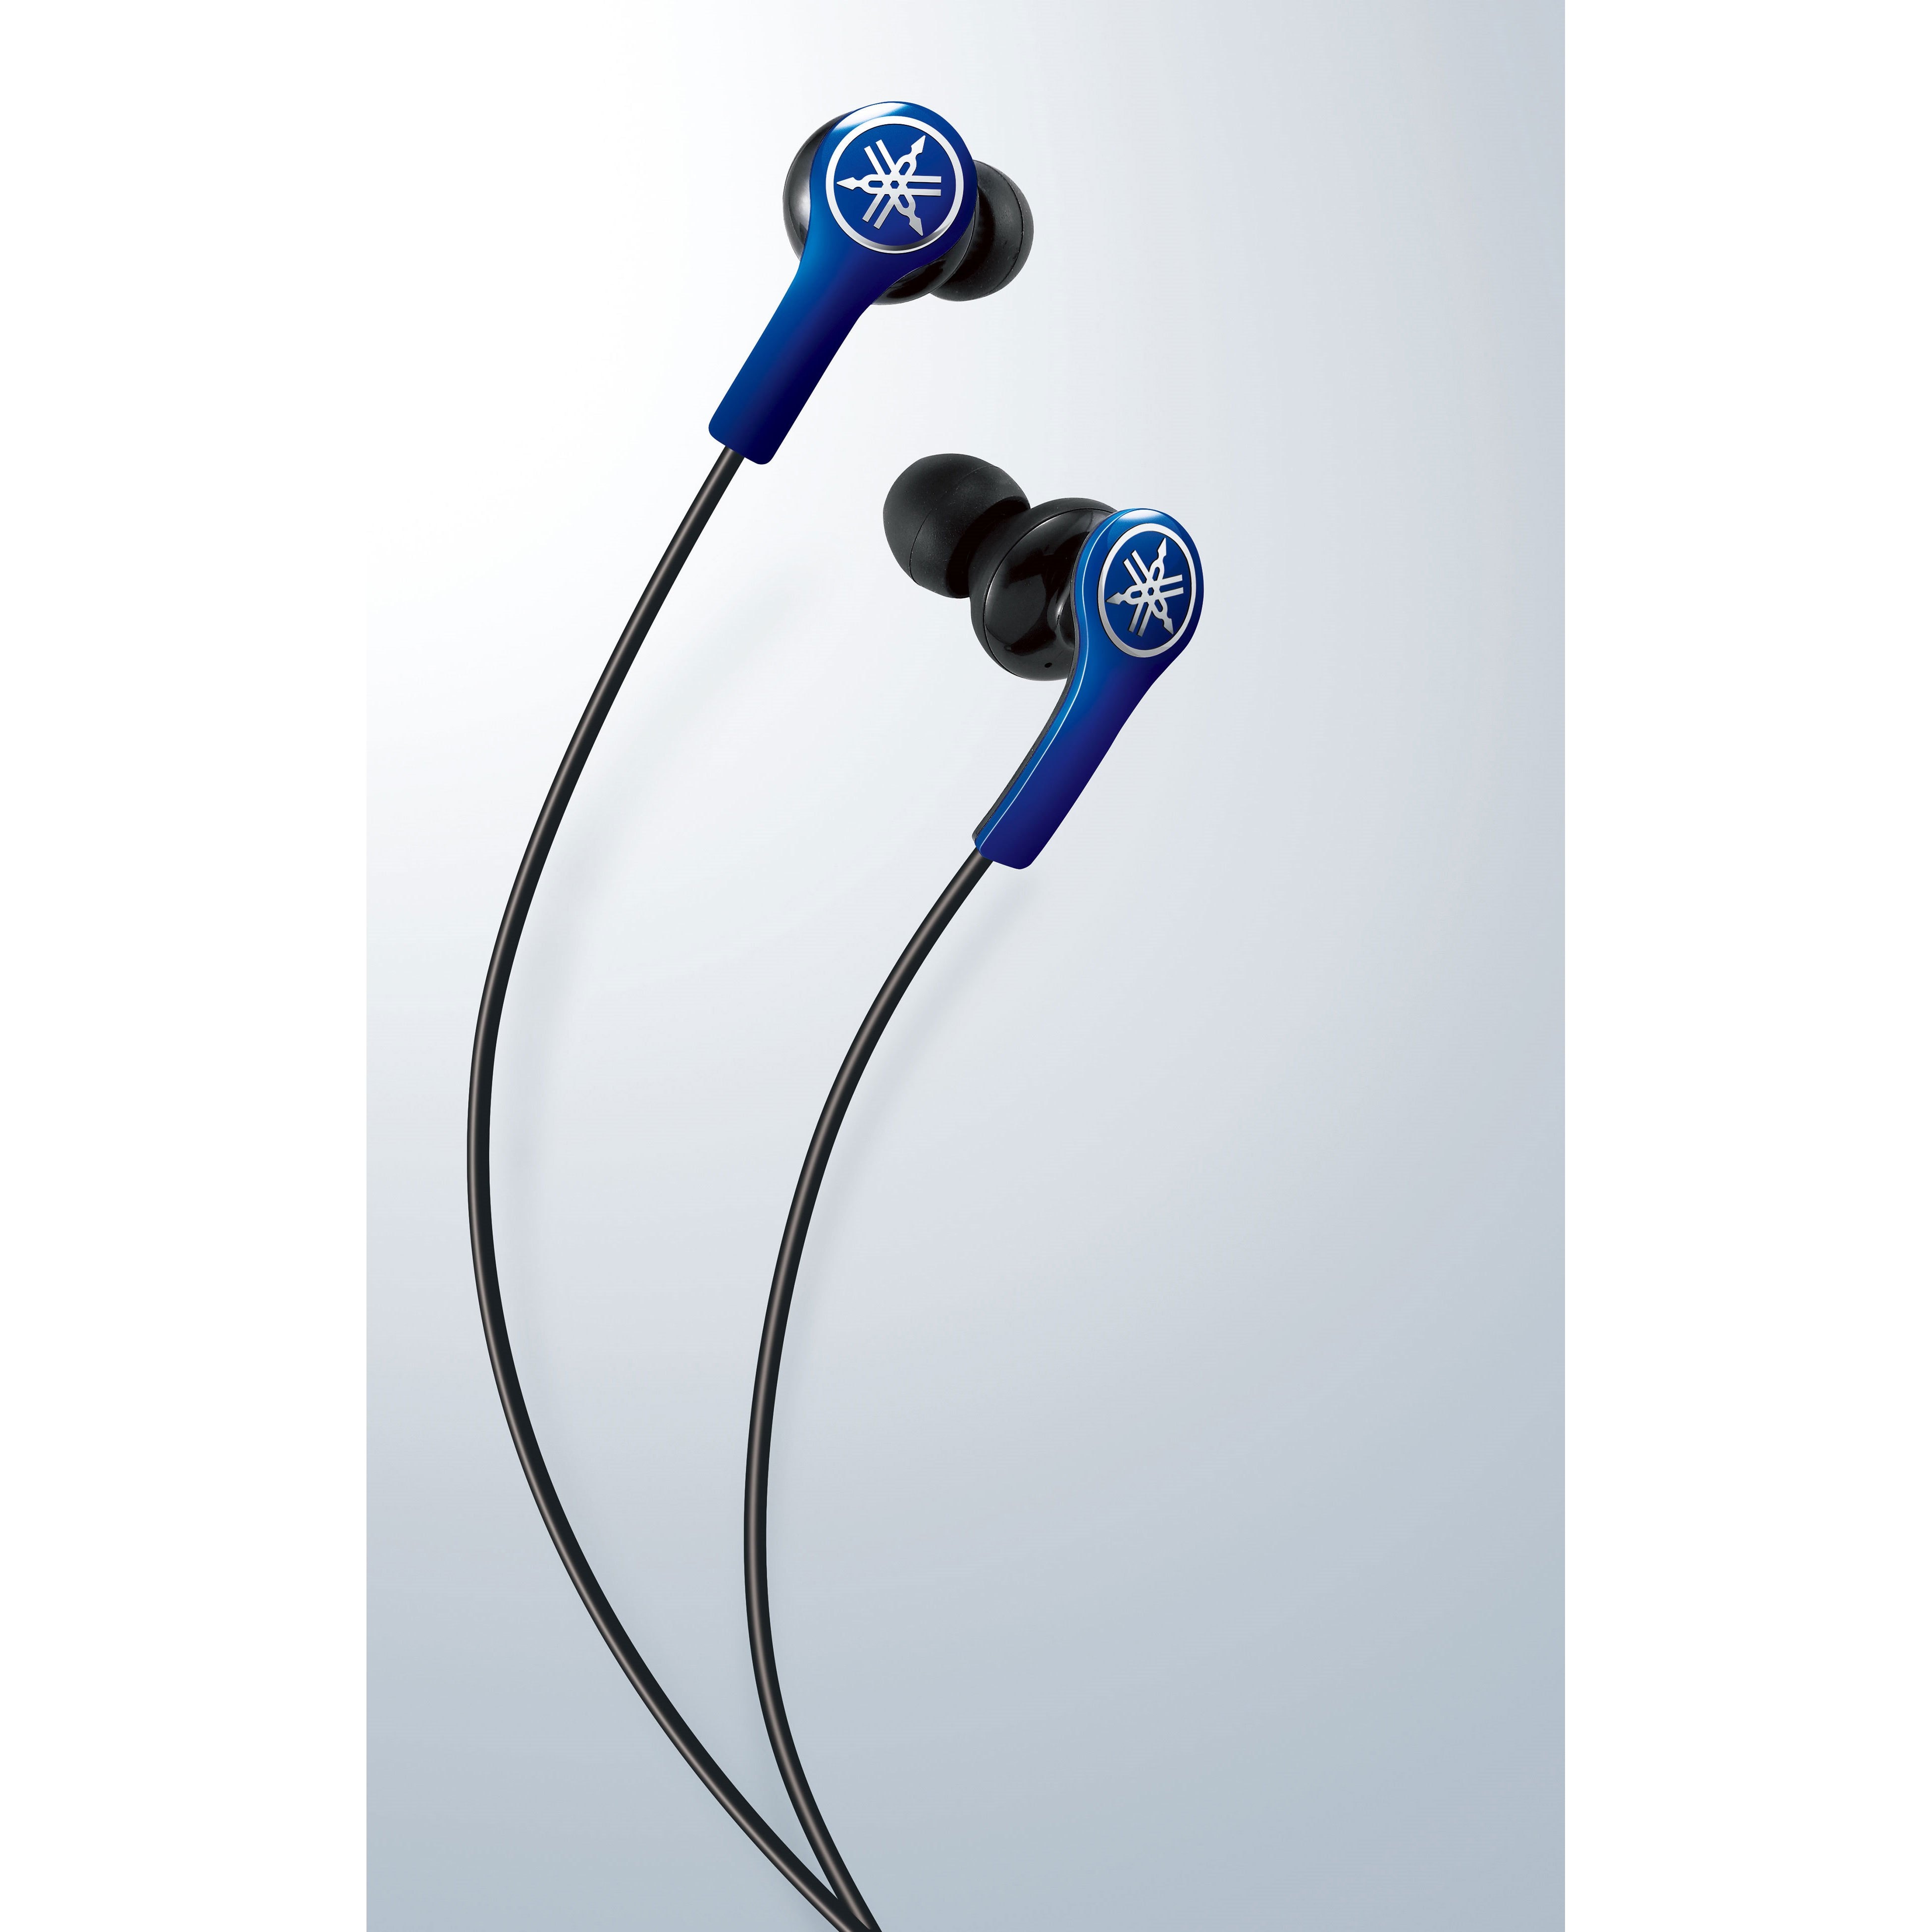 EPH-M100 - Overview - Headphones - Audio u0026 Visual - Products ...